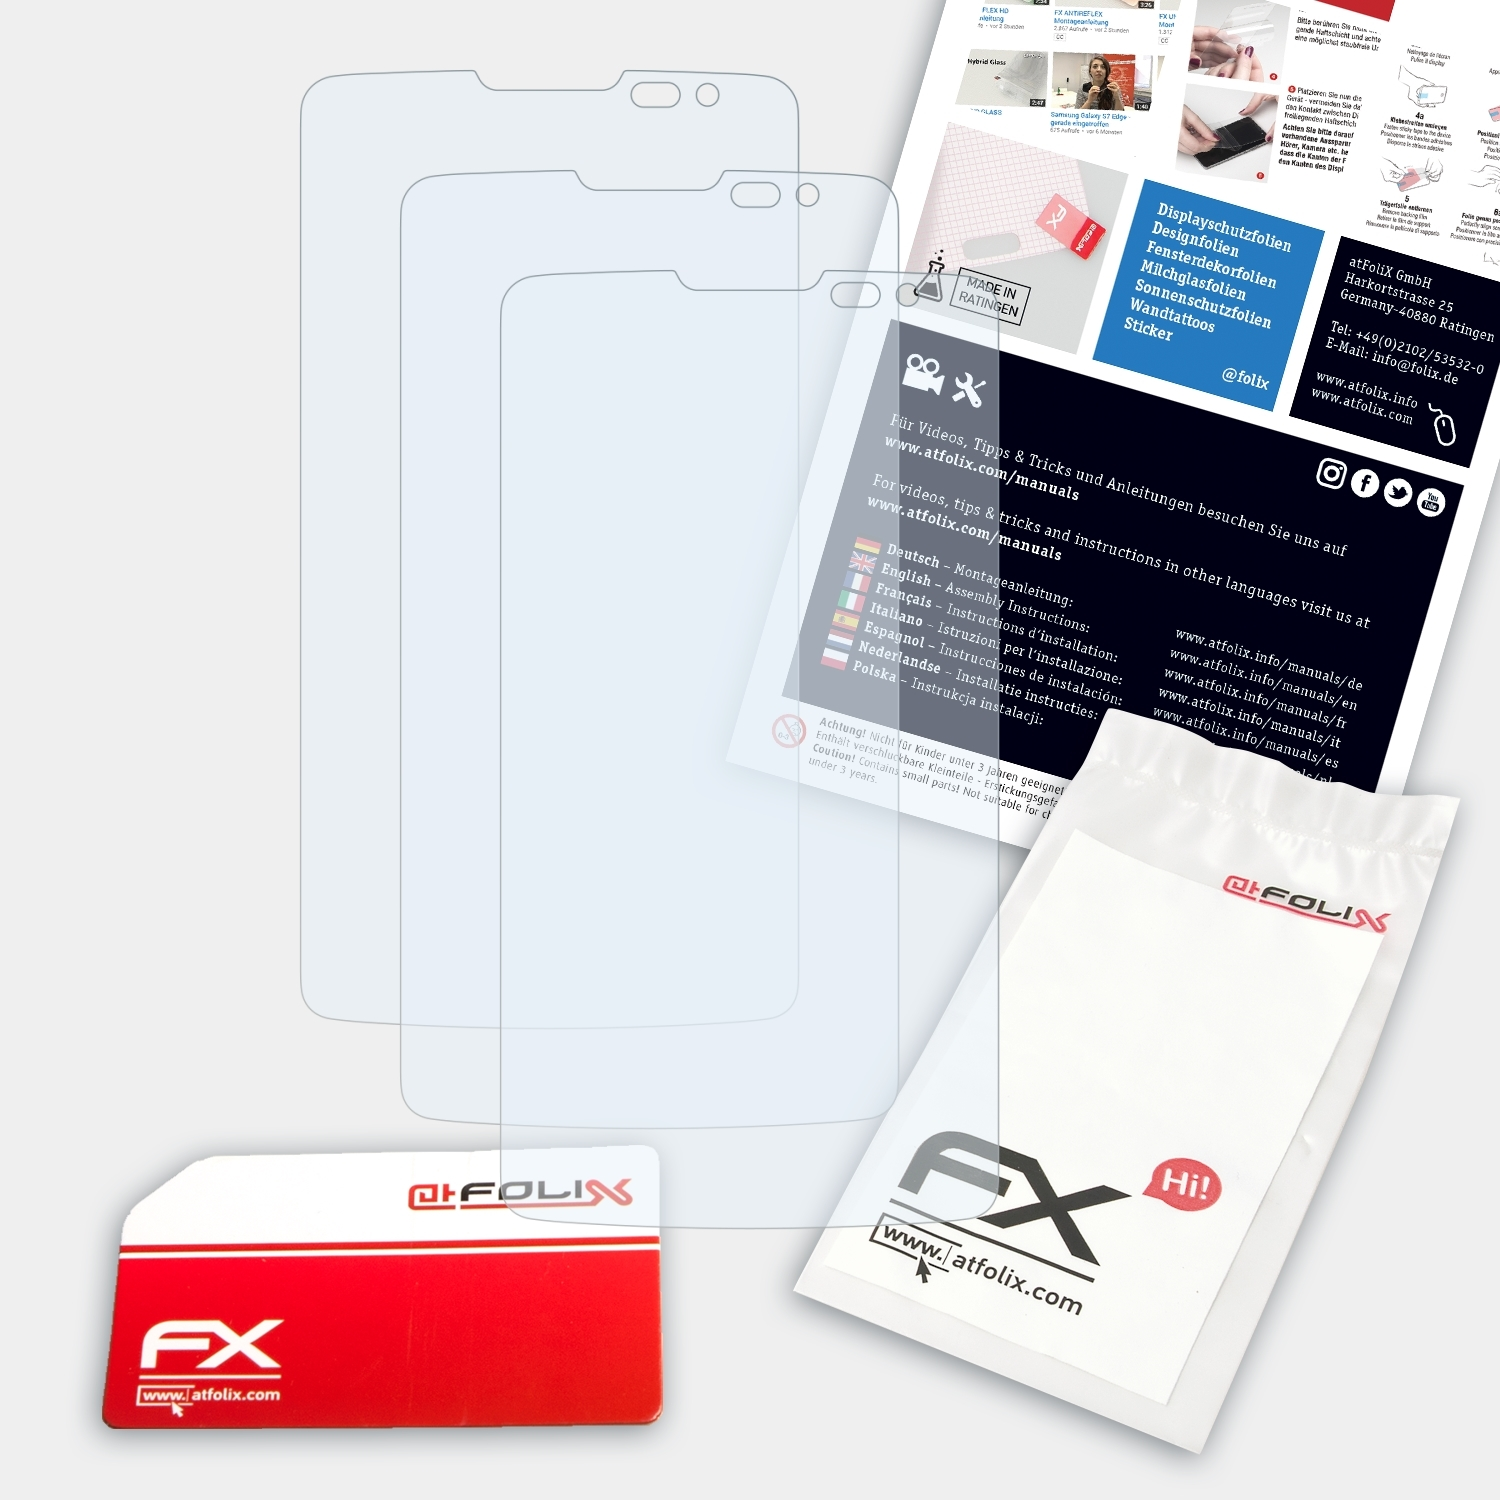 ATFOLIX 3x Displayschutz(für LG L60) FX-Clear